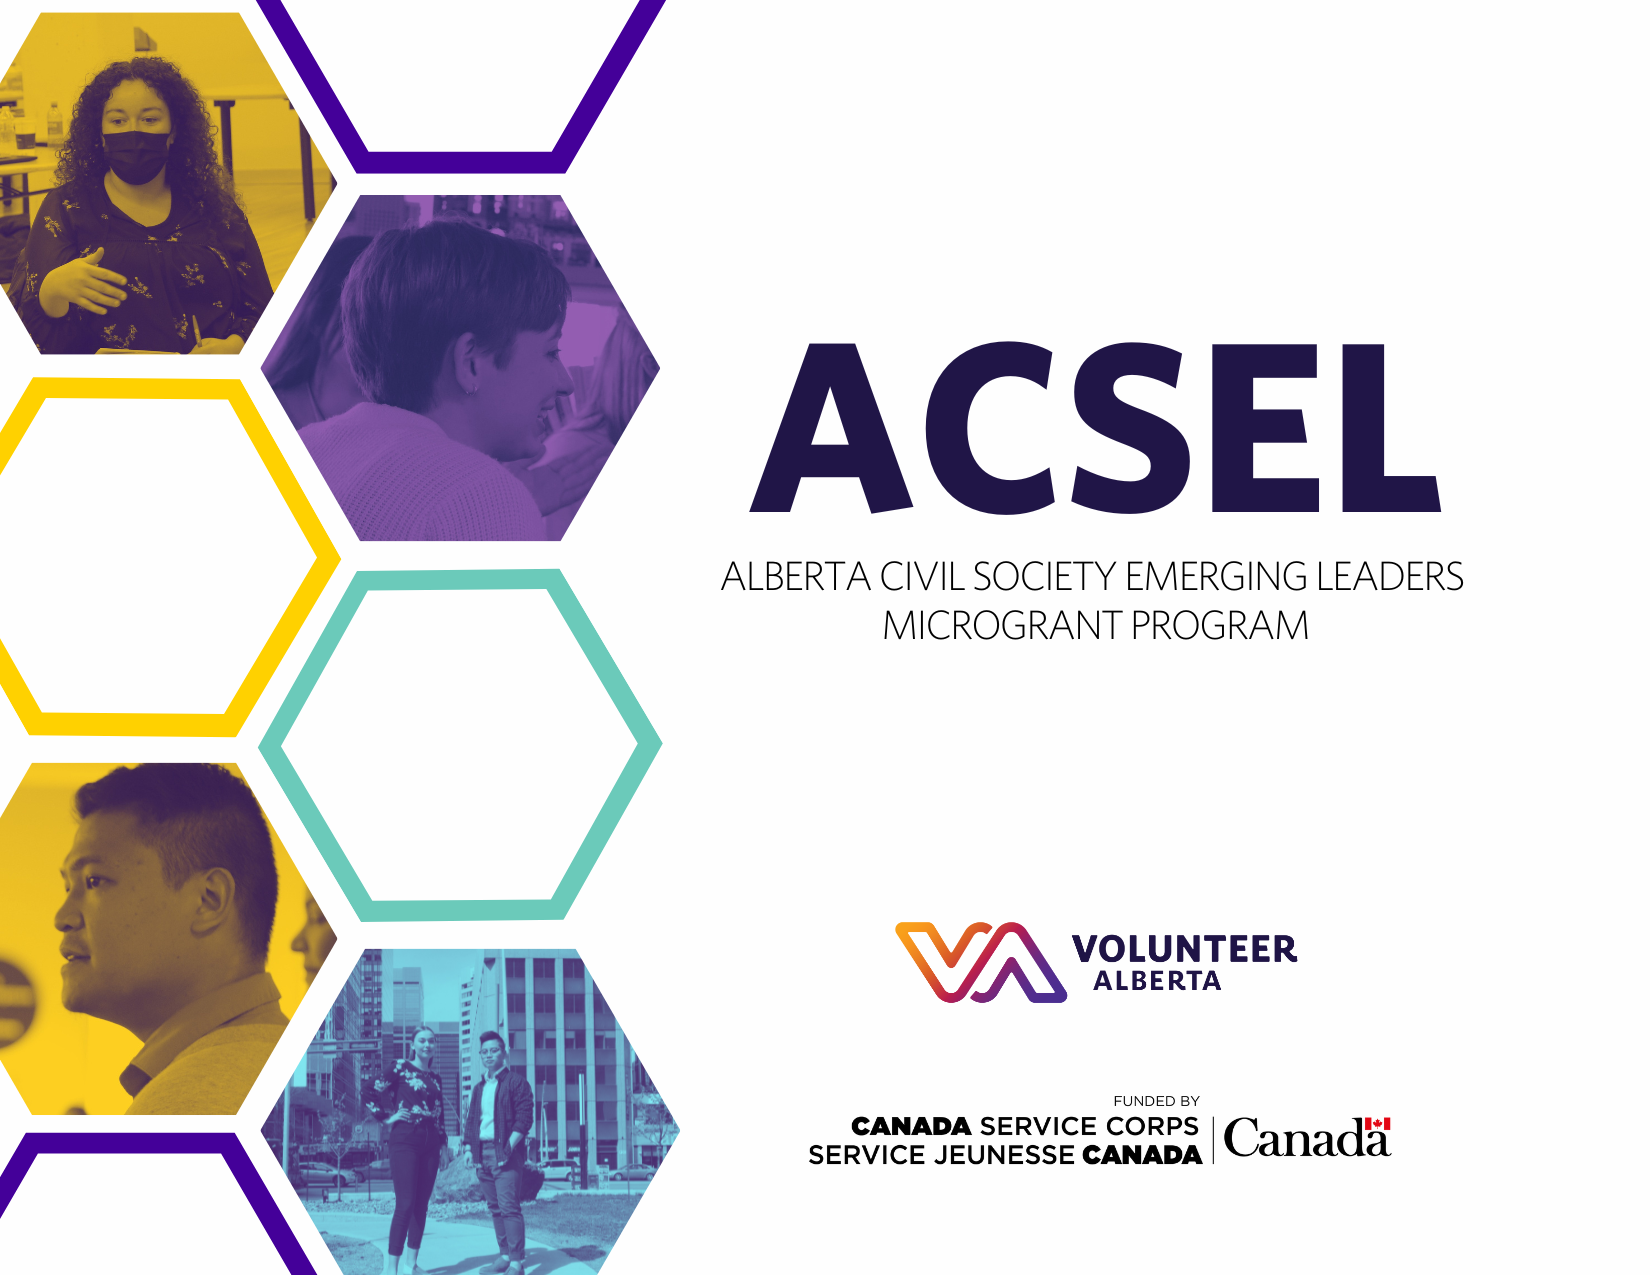 ACSEL: Alberta Civil Society Emerging Leaders Microgrant Program. A partnership between Volunteer Alberta and Canada Service Corps.